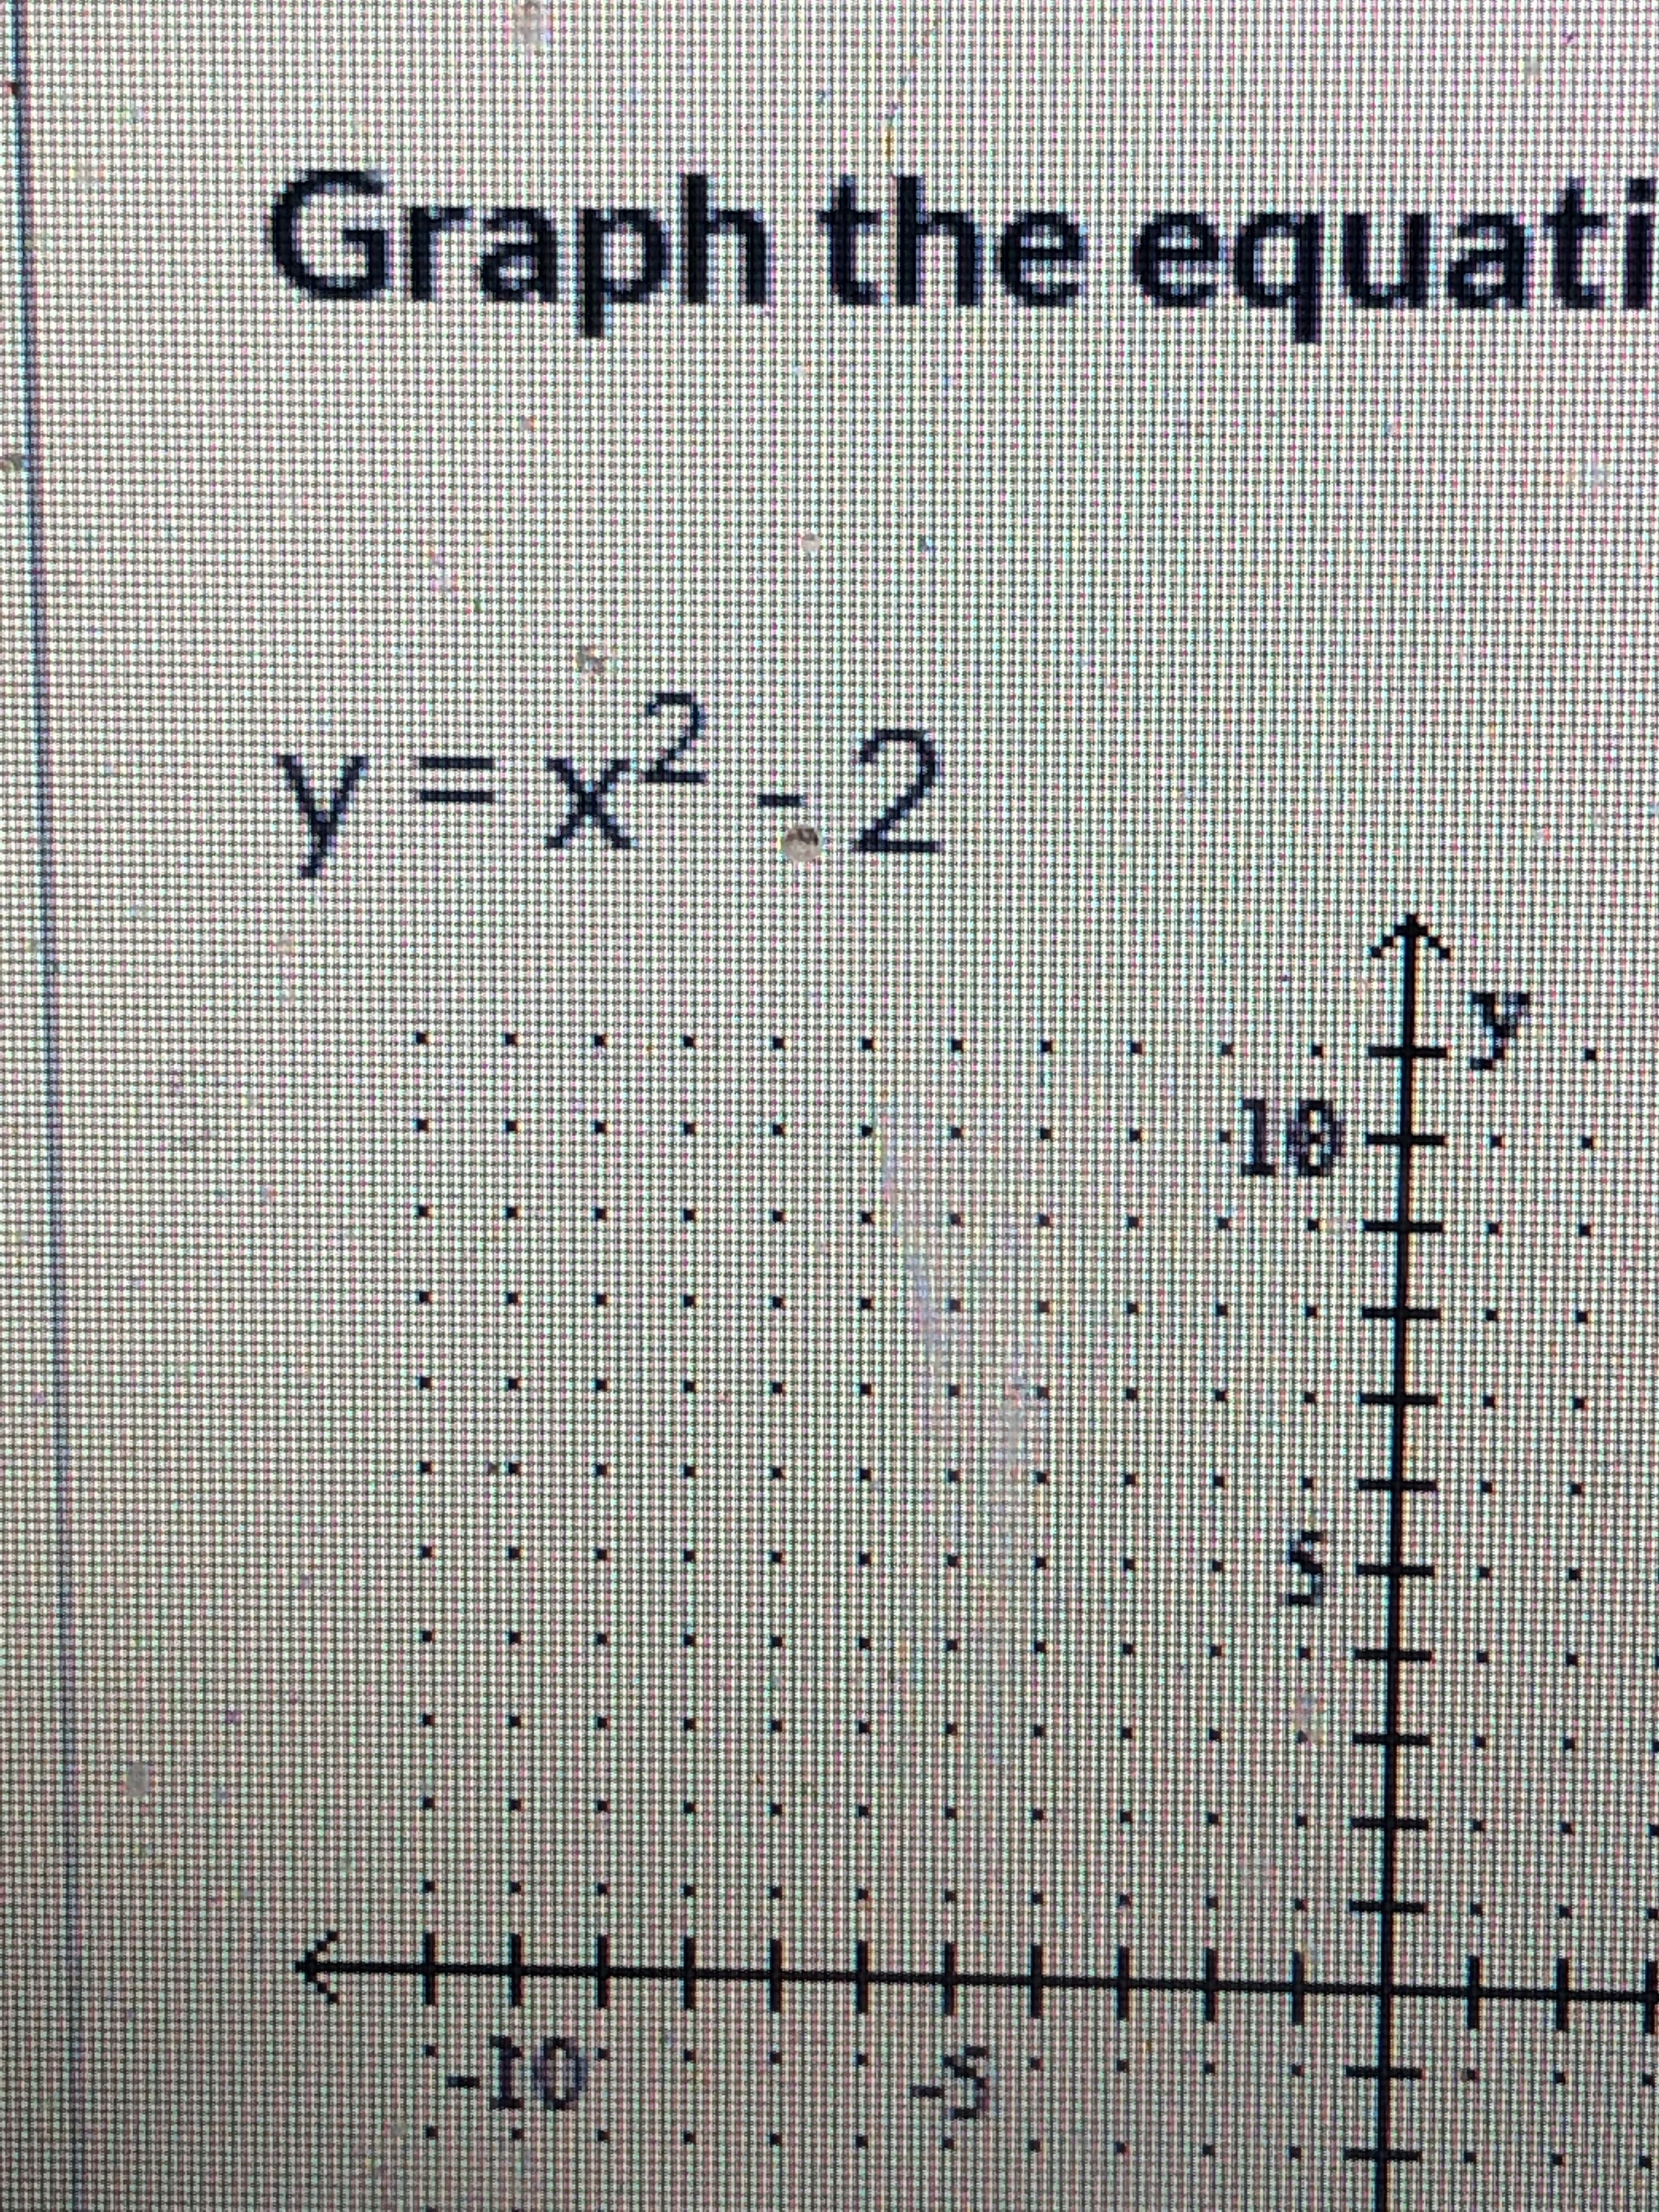 Graph the equati
y 3 x² - 2
18
+++++H
%3
